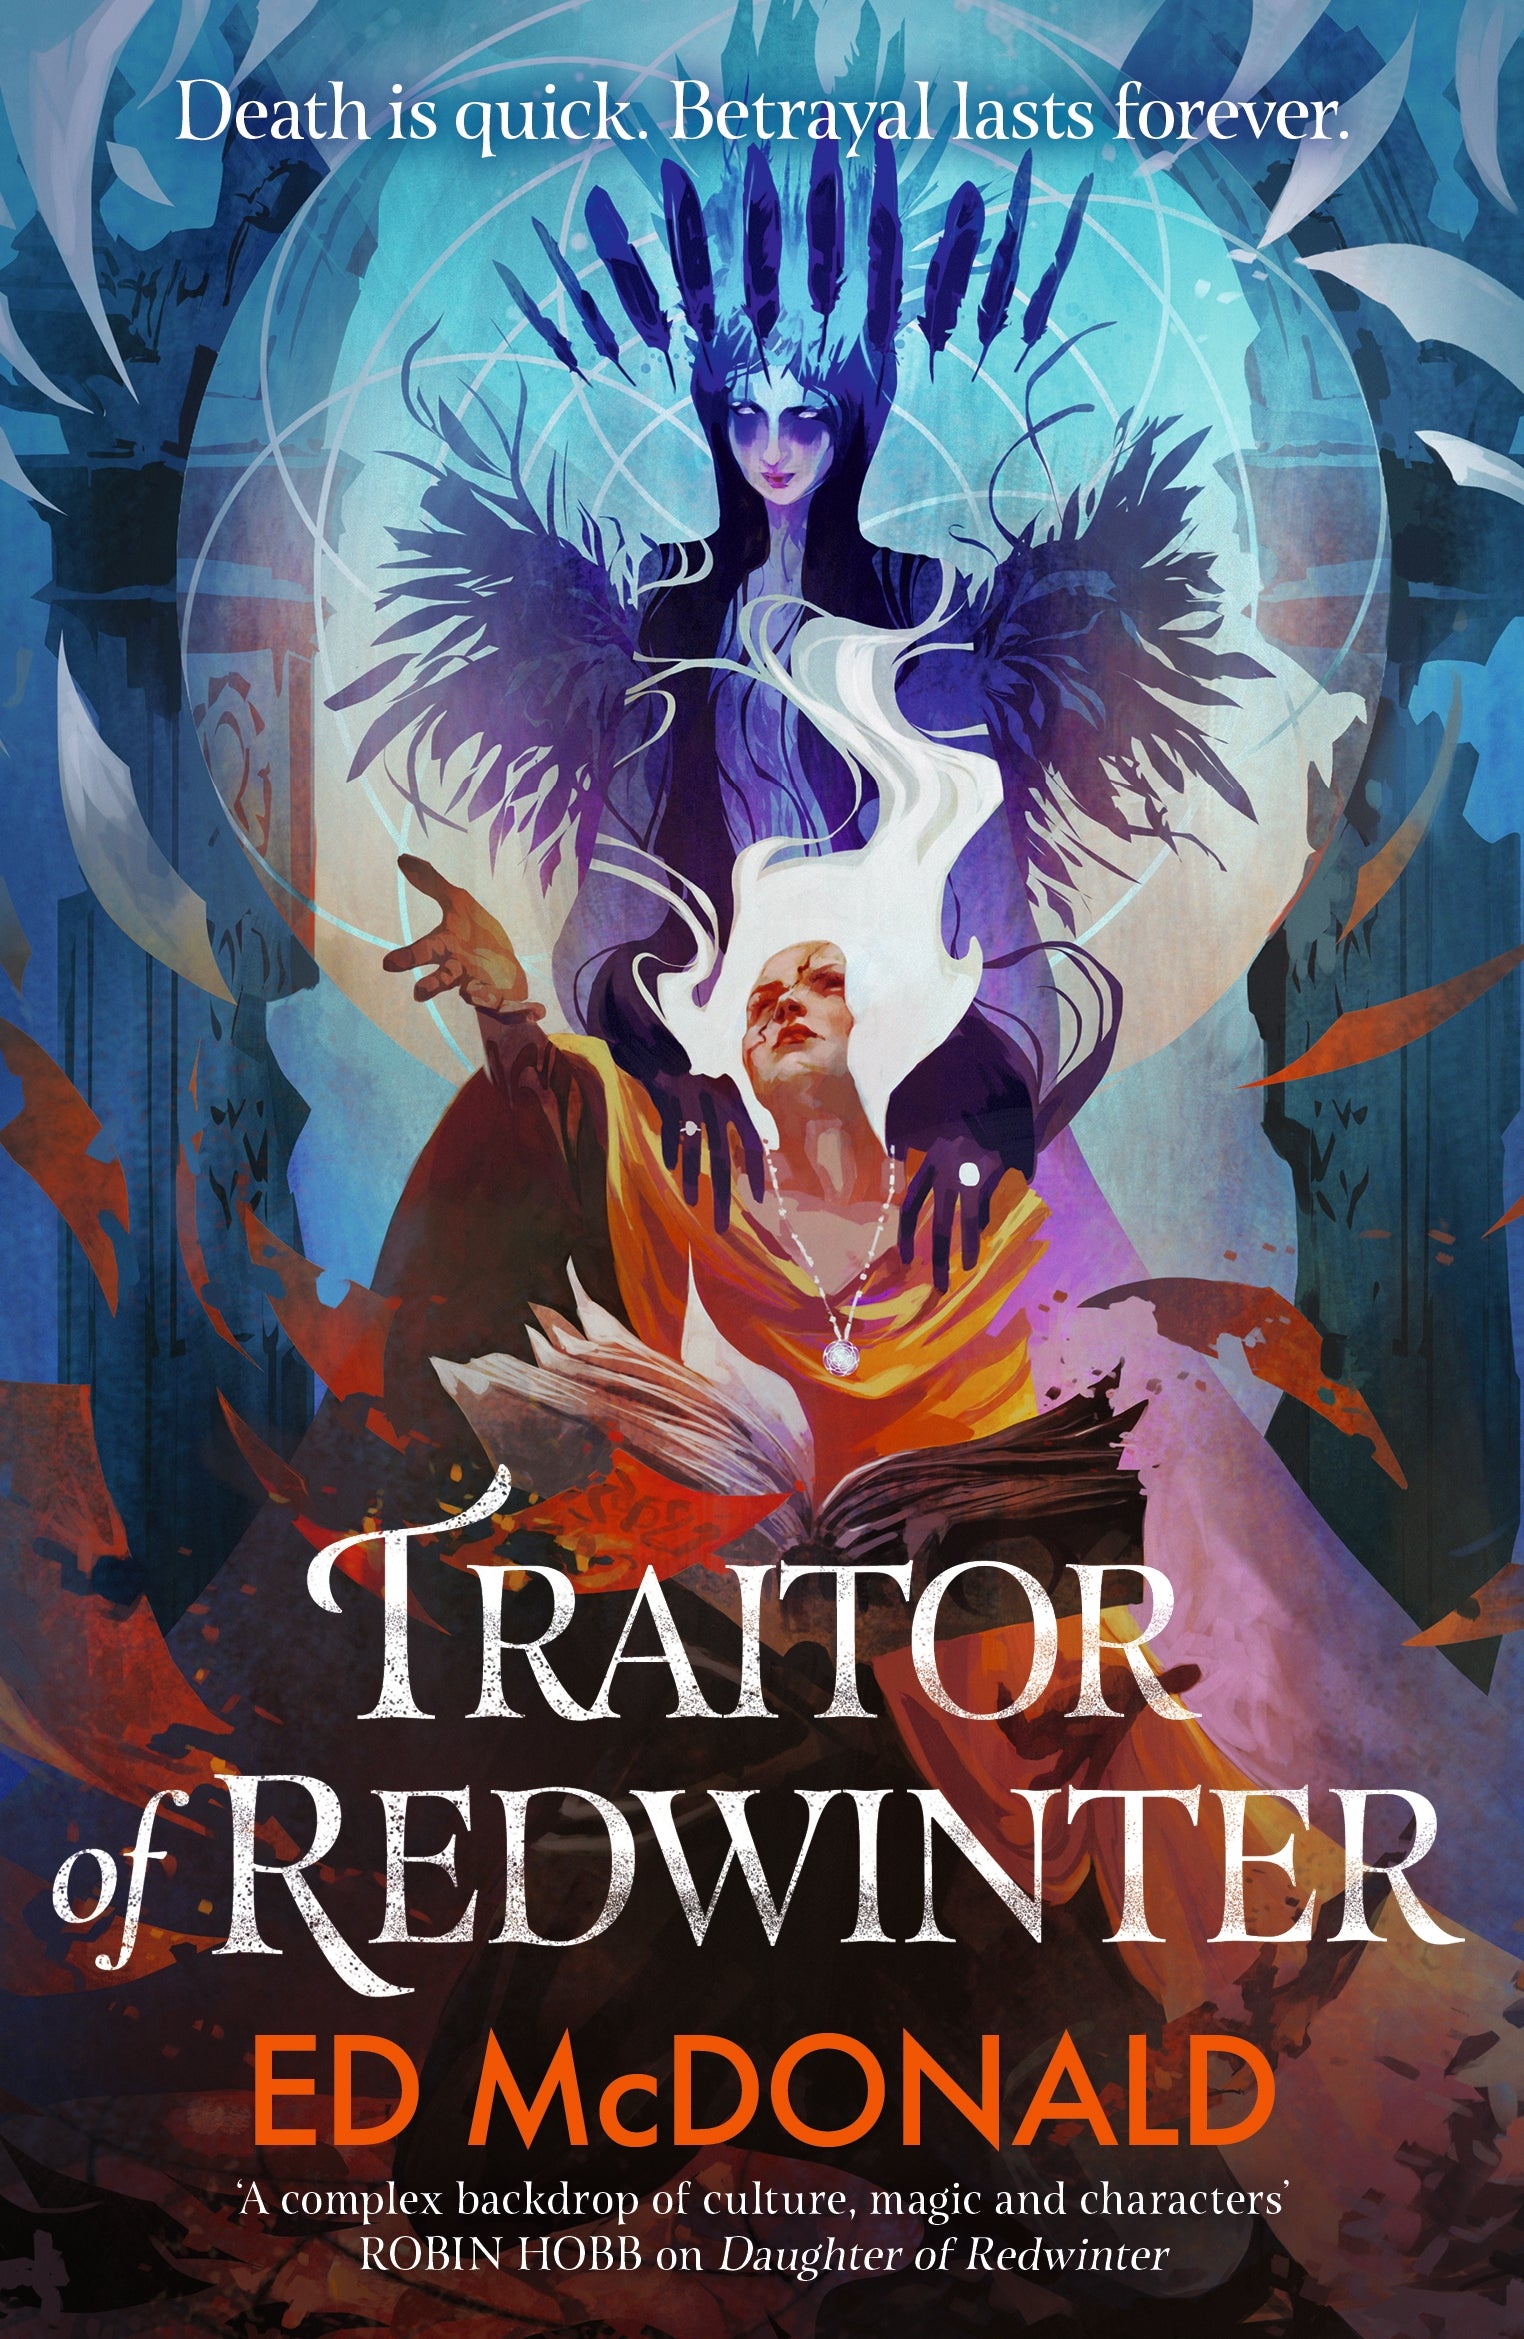 Traitor of Redwinter by Ed McDonald